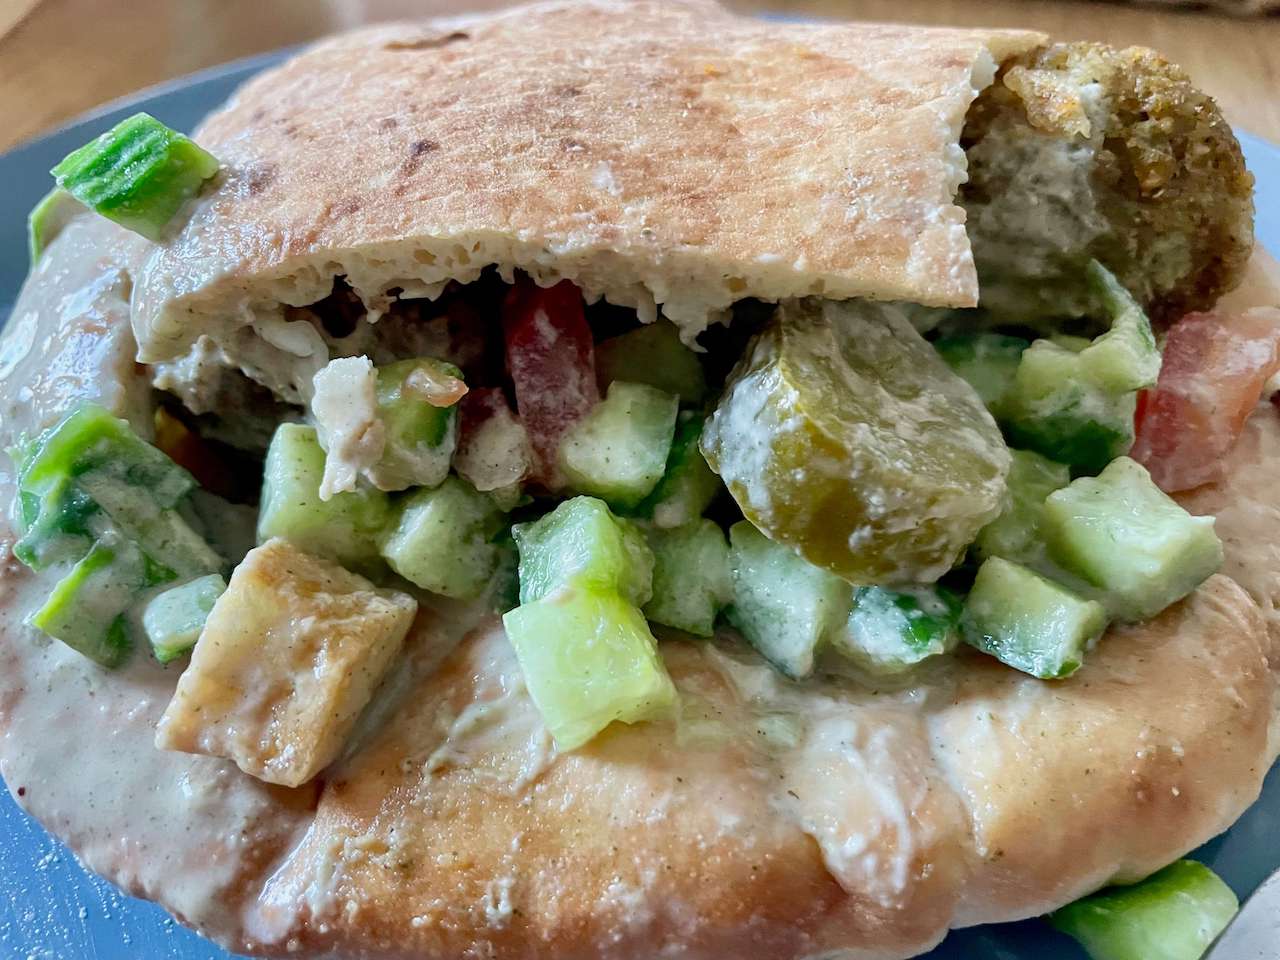 Israel, Jerusalem - Falafel in pita bread